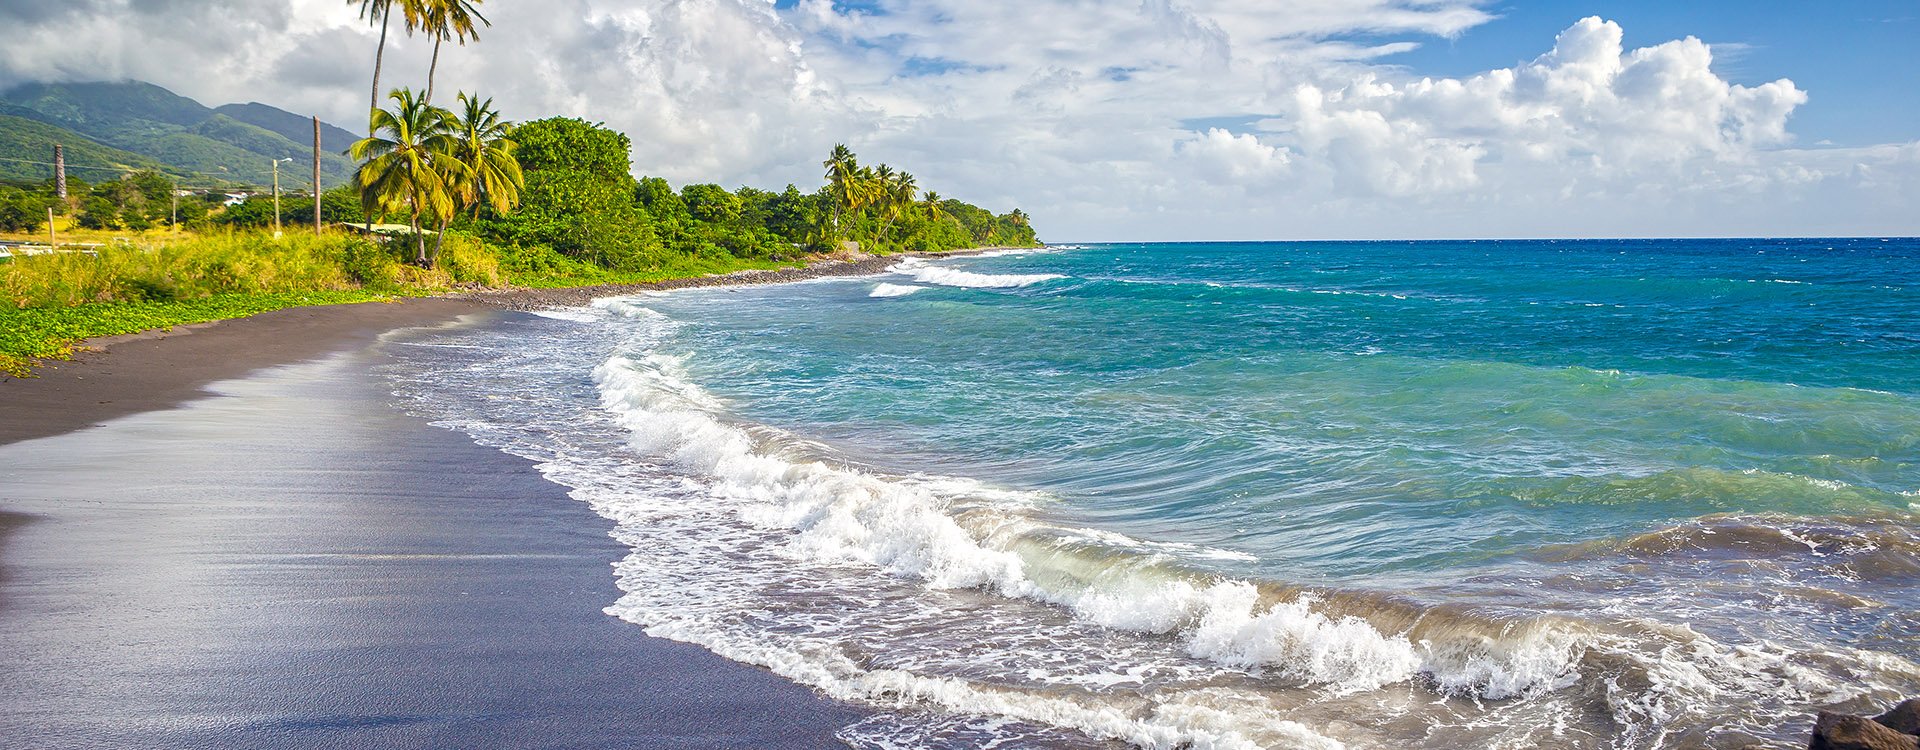 Beach on a St. Kitts island with black sand